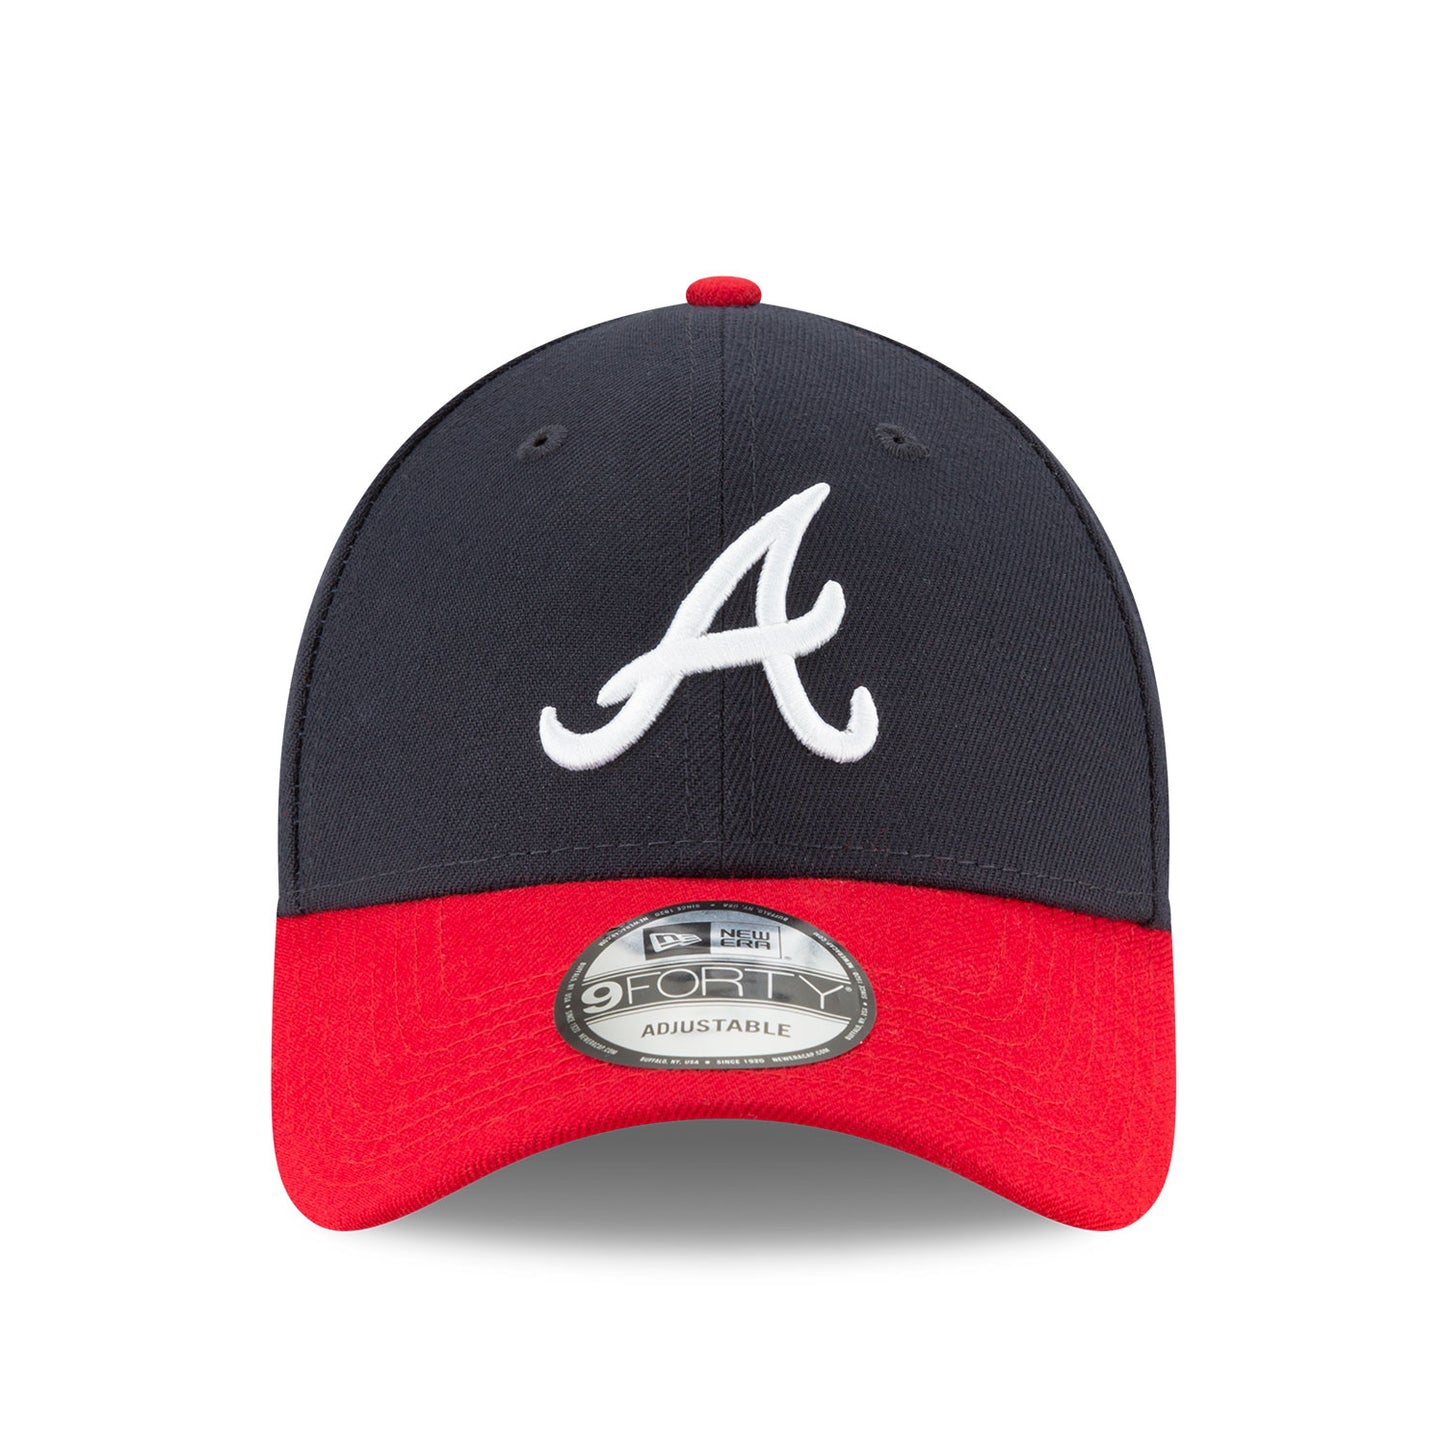 THE LEAGUE Atlanta Braves 9FORTY New Era Cap